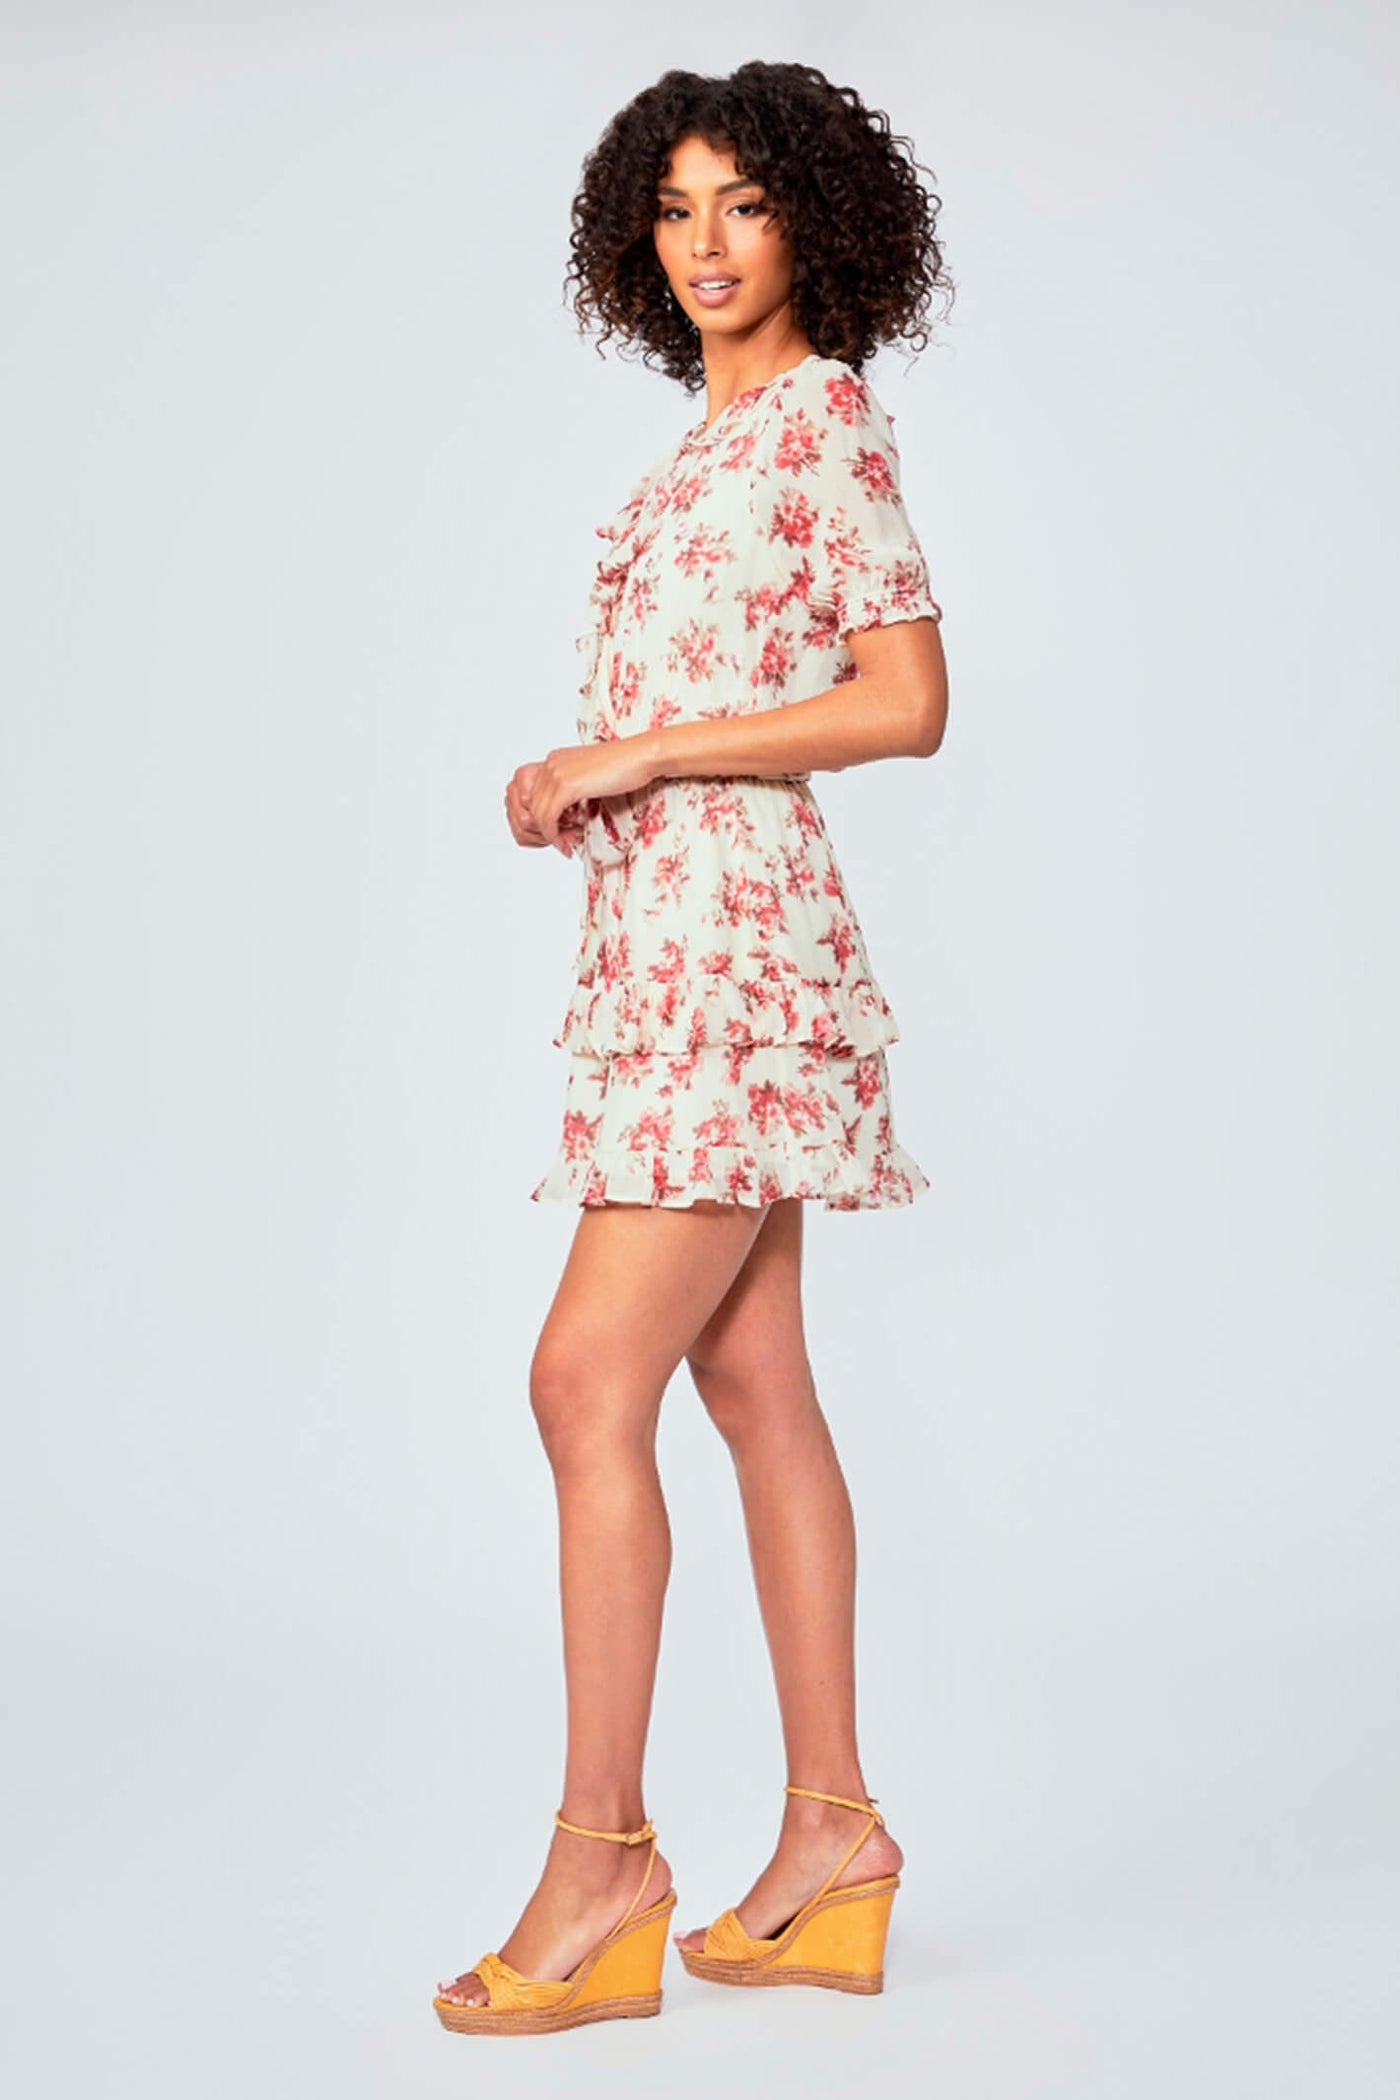 Paige Evonna Cream Red Floral Print Silk Dress - Lonah Boutique